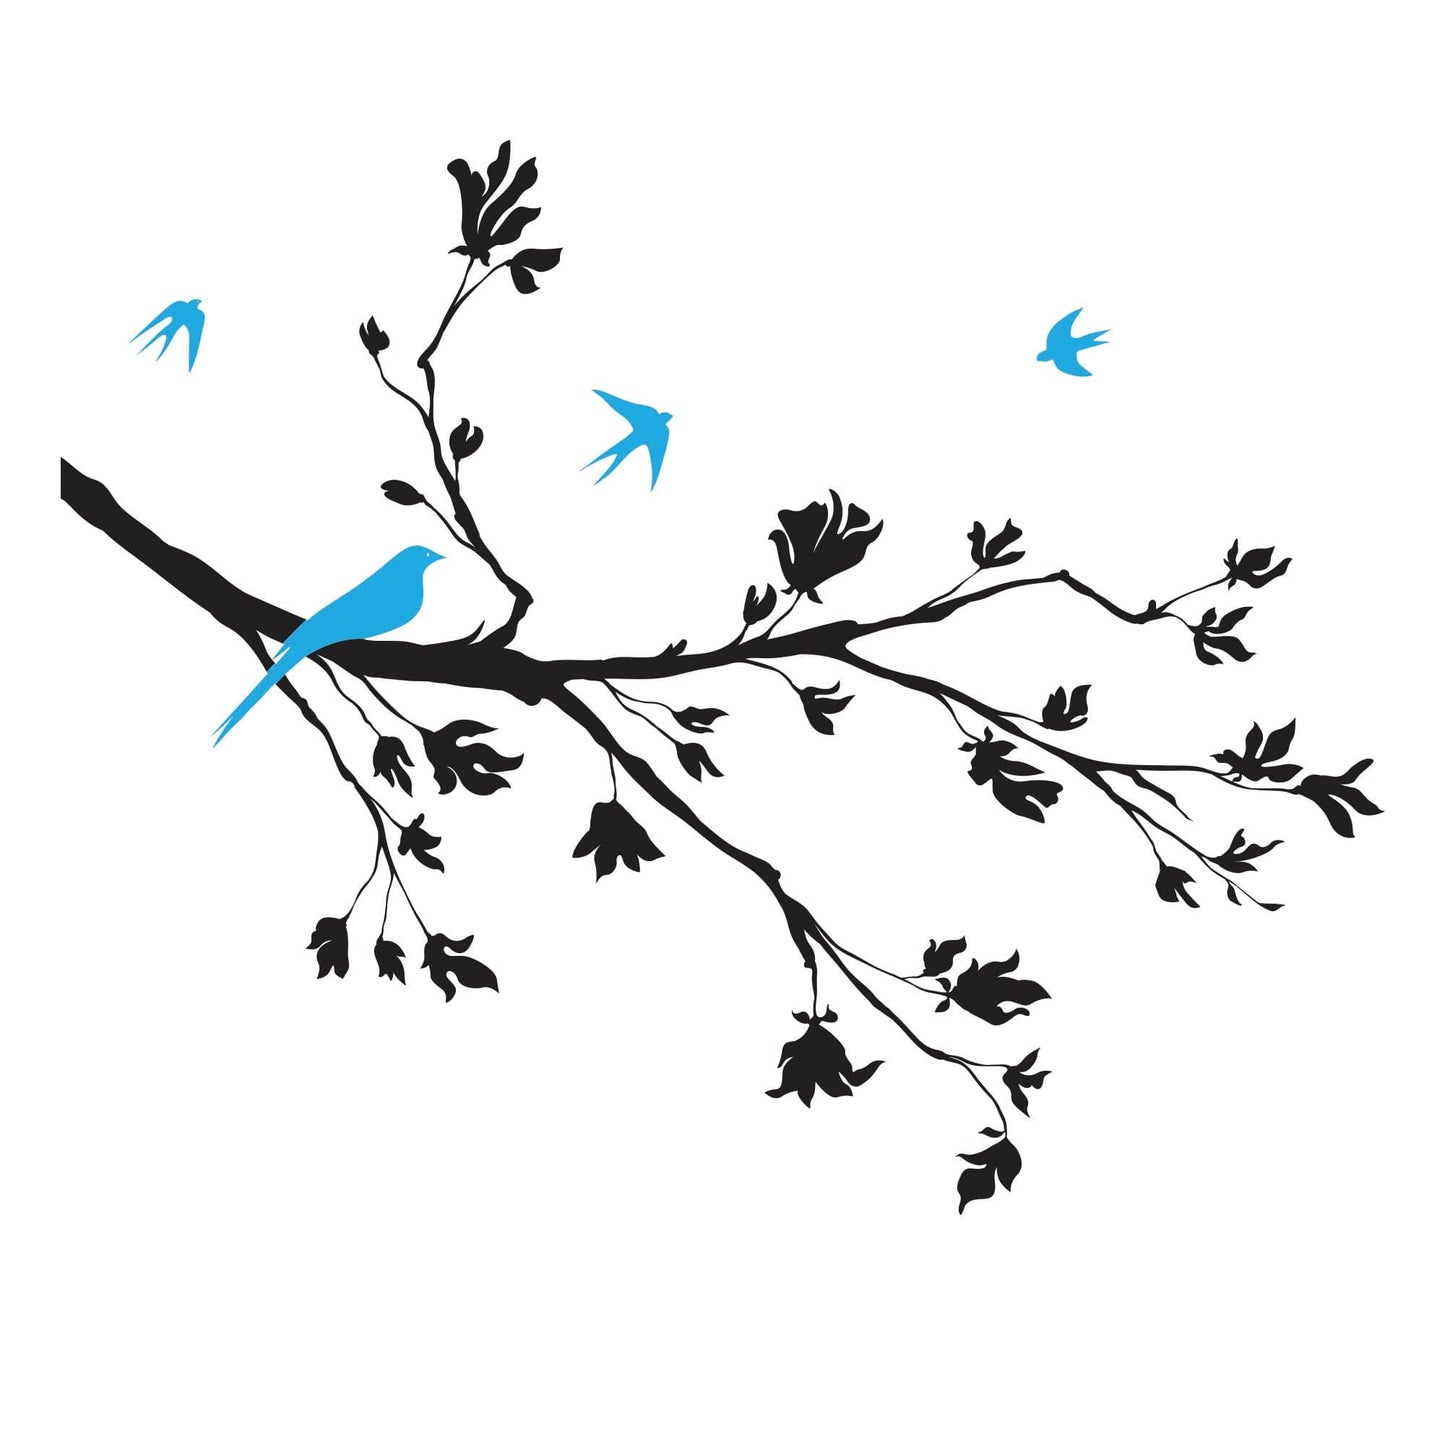 Springtime Flying Birds on Tree Branch Vinyl Wall Decal Sticker. #1010